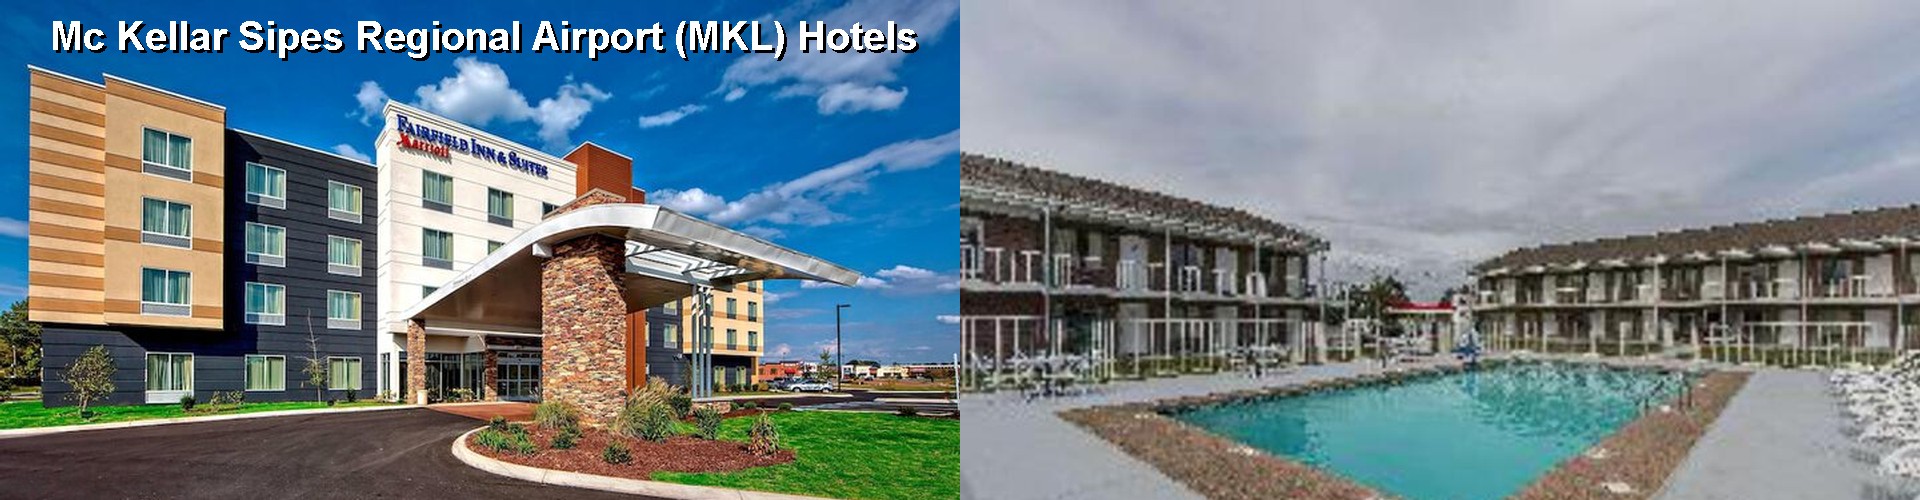 5 Best Hotels near Mc Kellar Sipes Regional Airport (MKL)